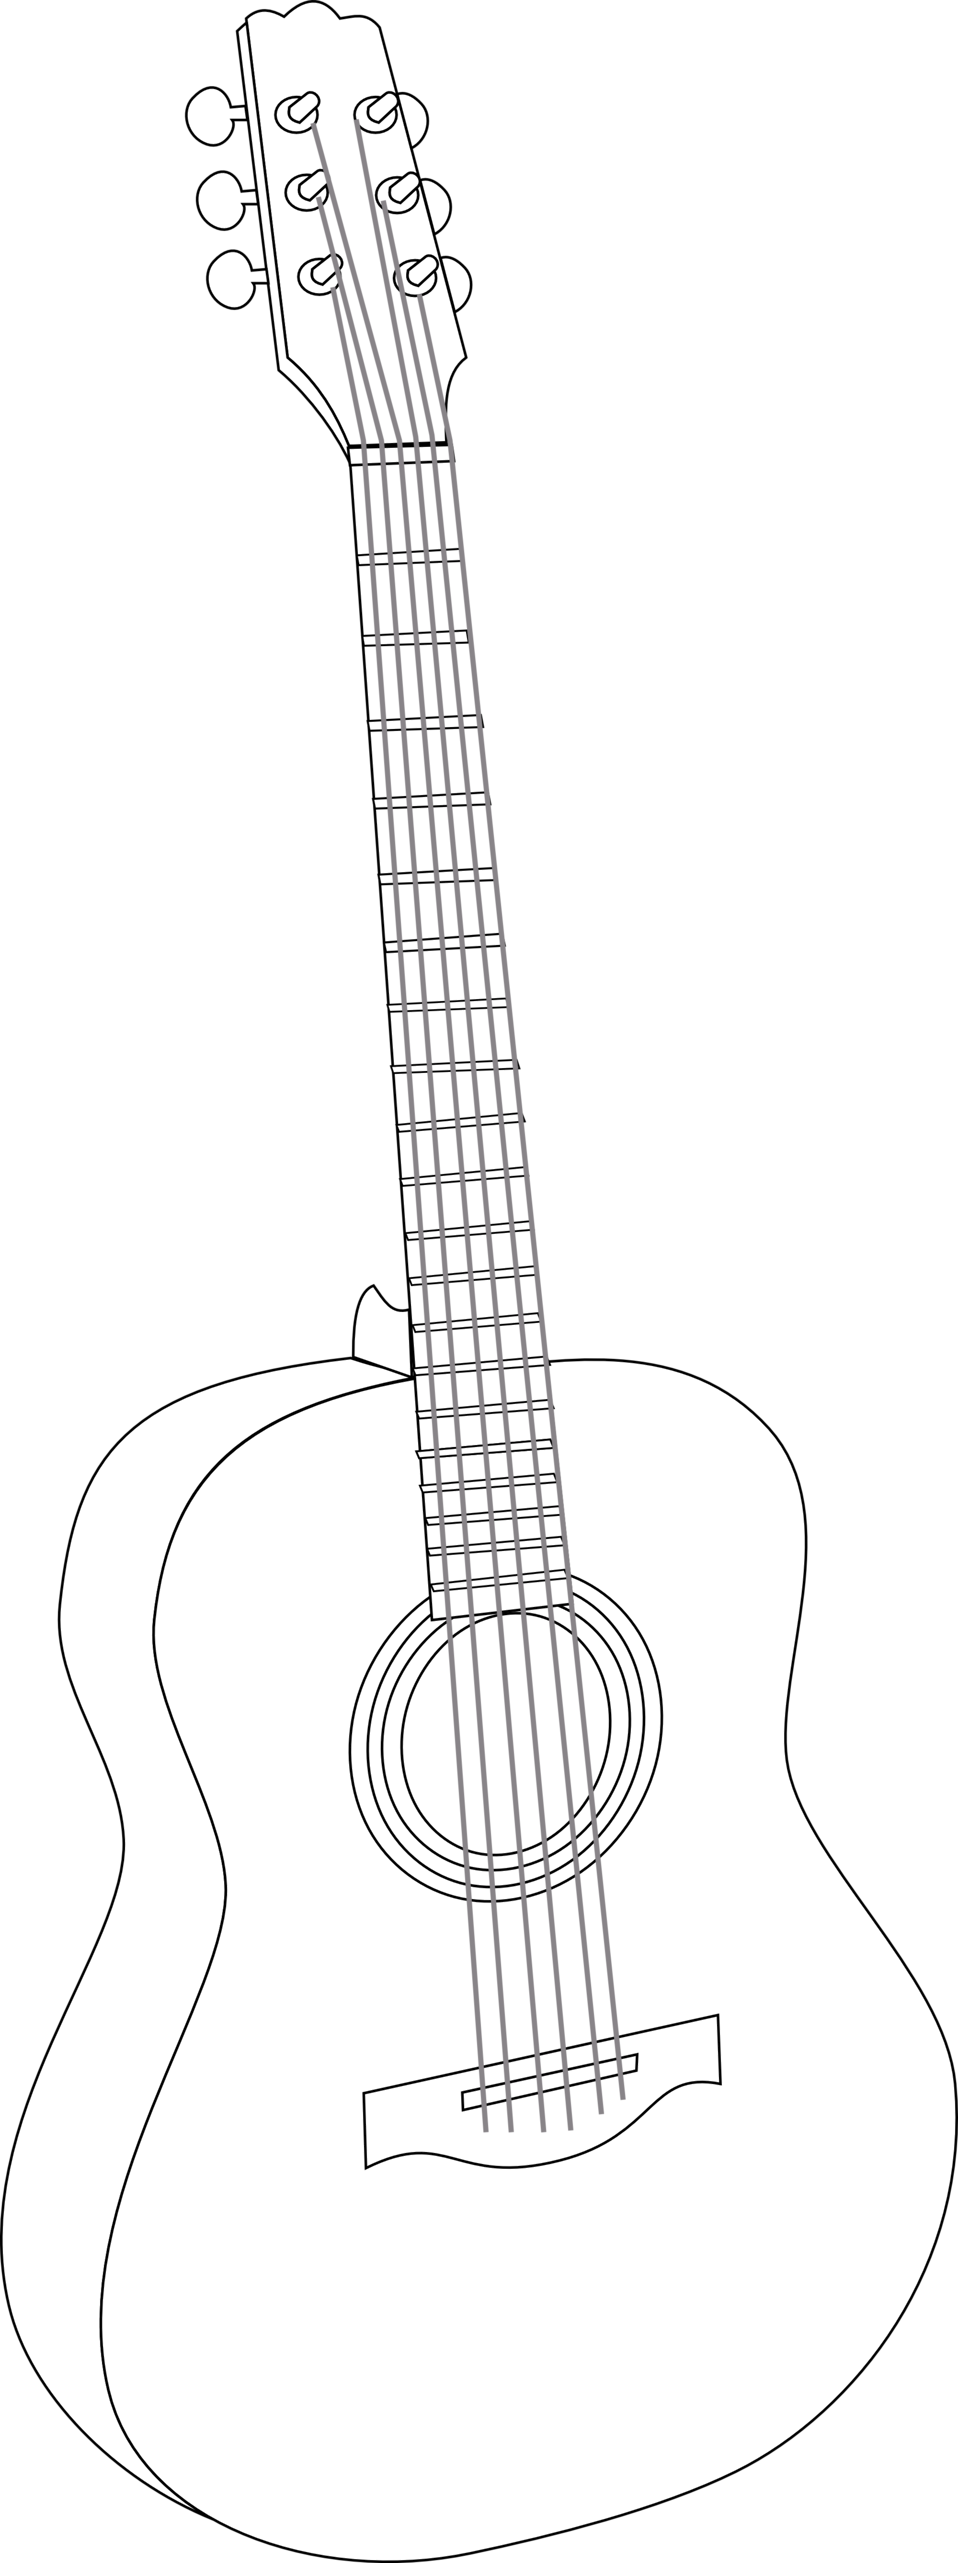 Clipart guitar public domain. Clip art image id